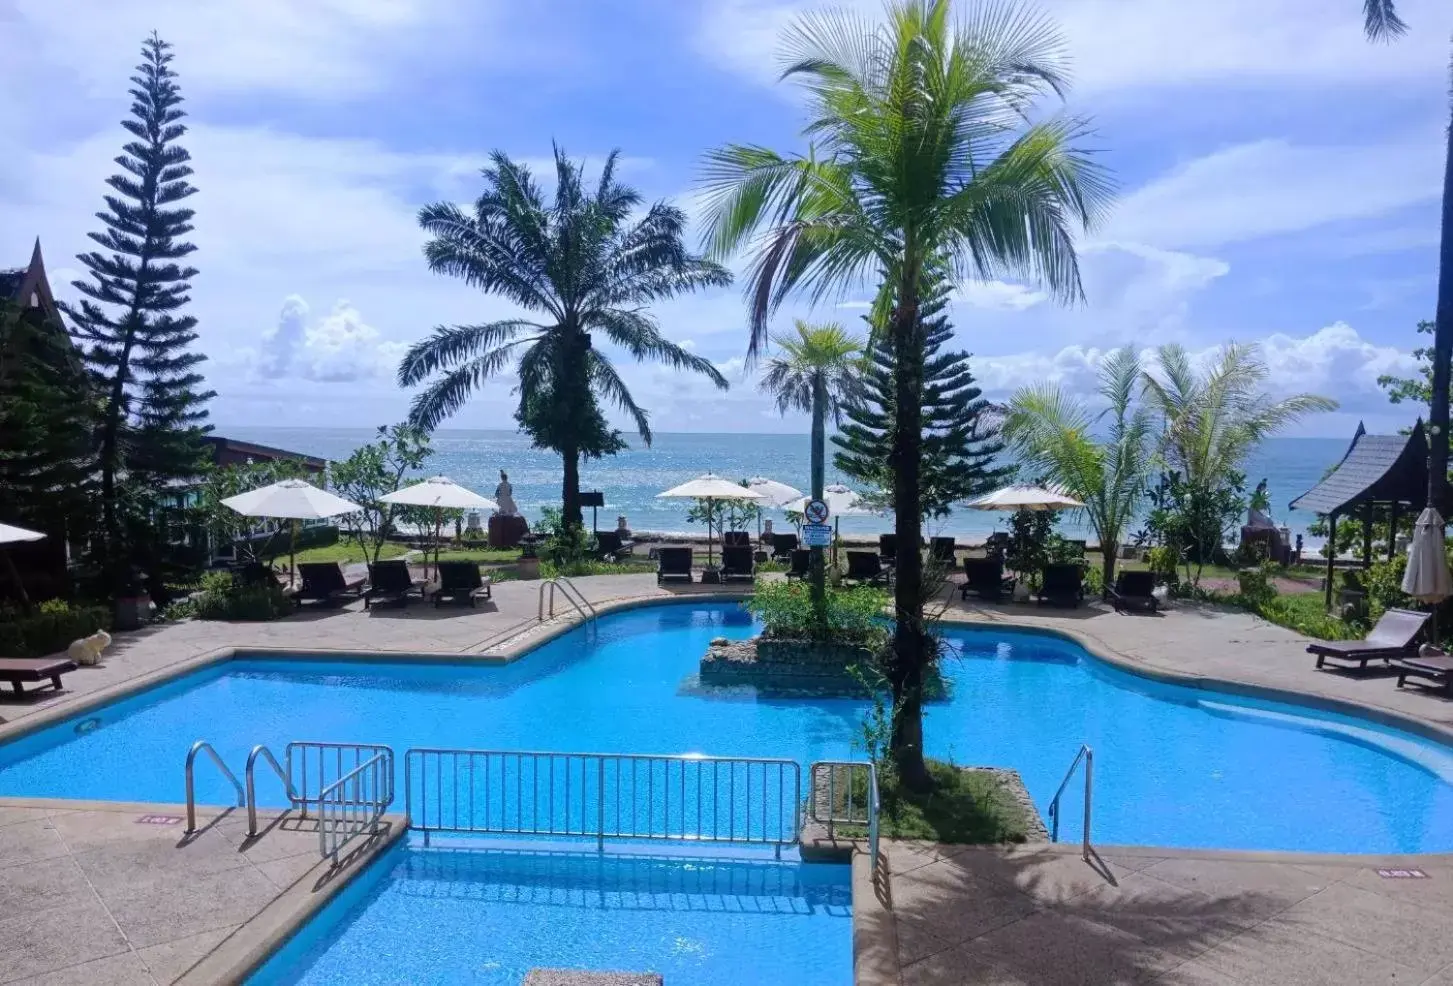 Swimming pool in Khaolak Palm Beach Resort